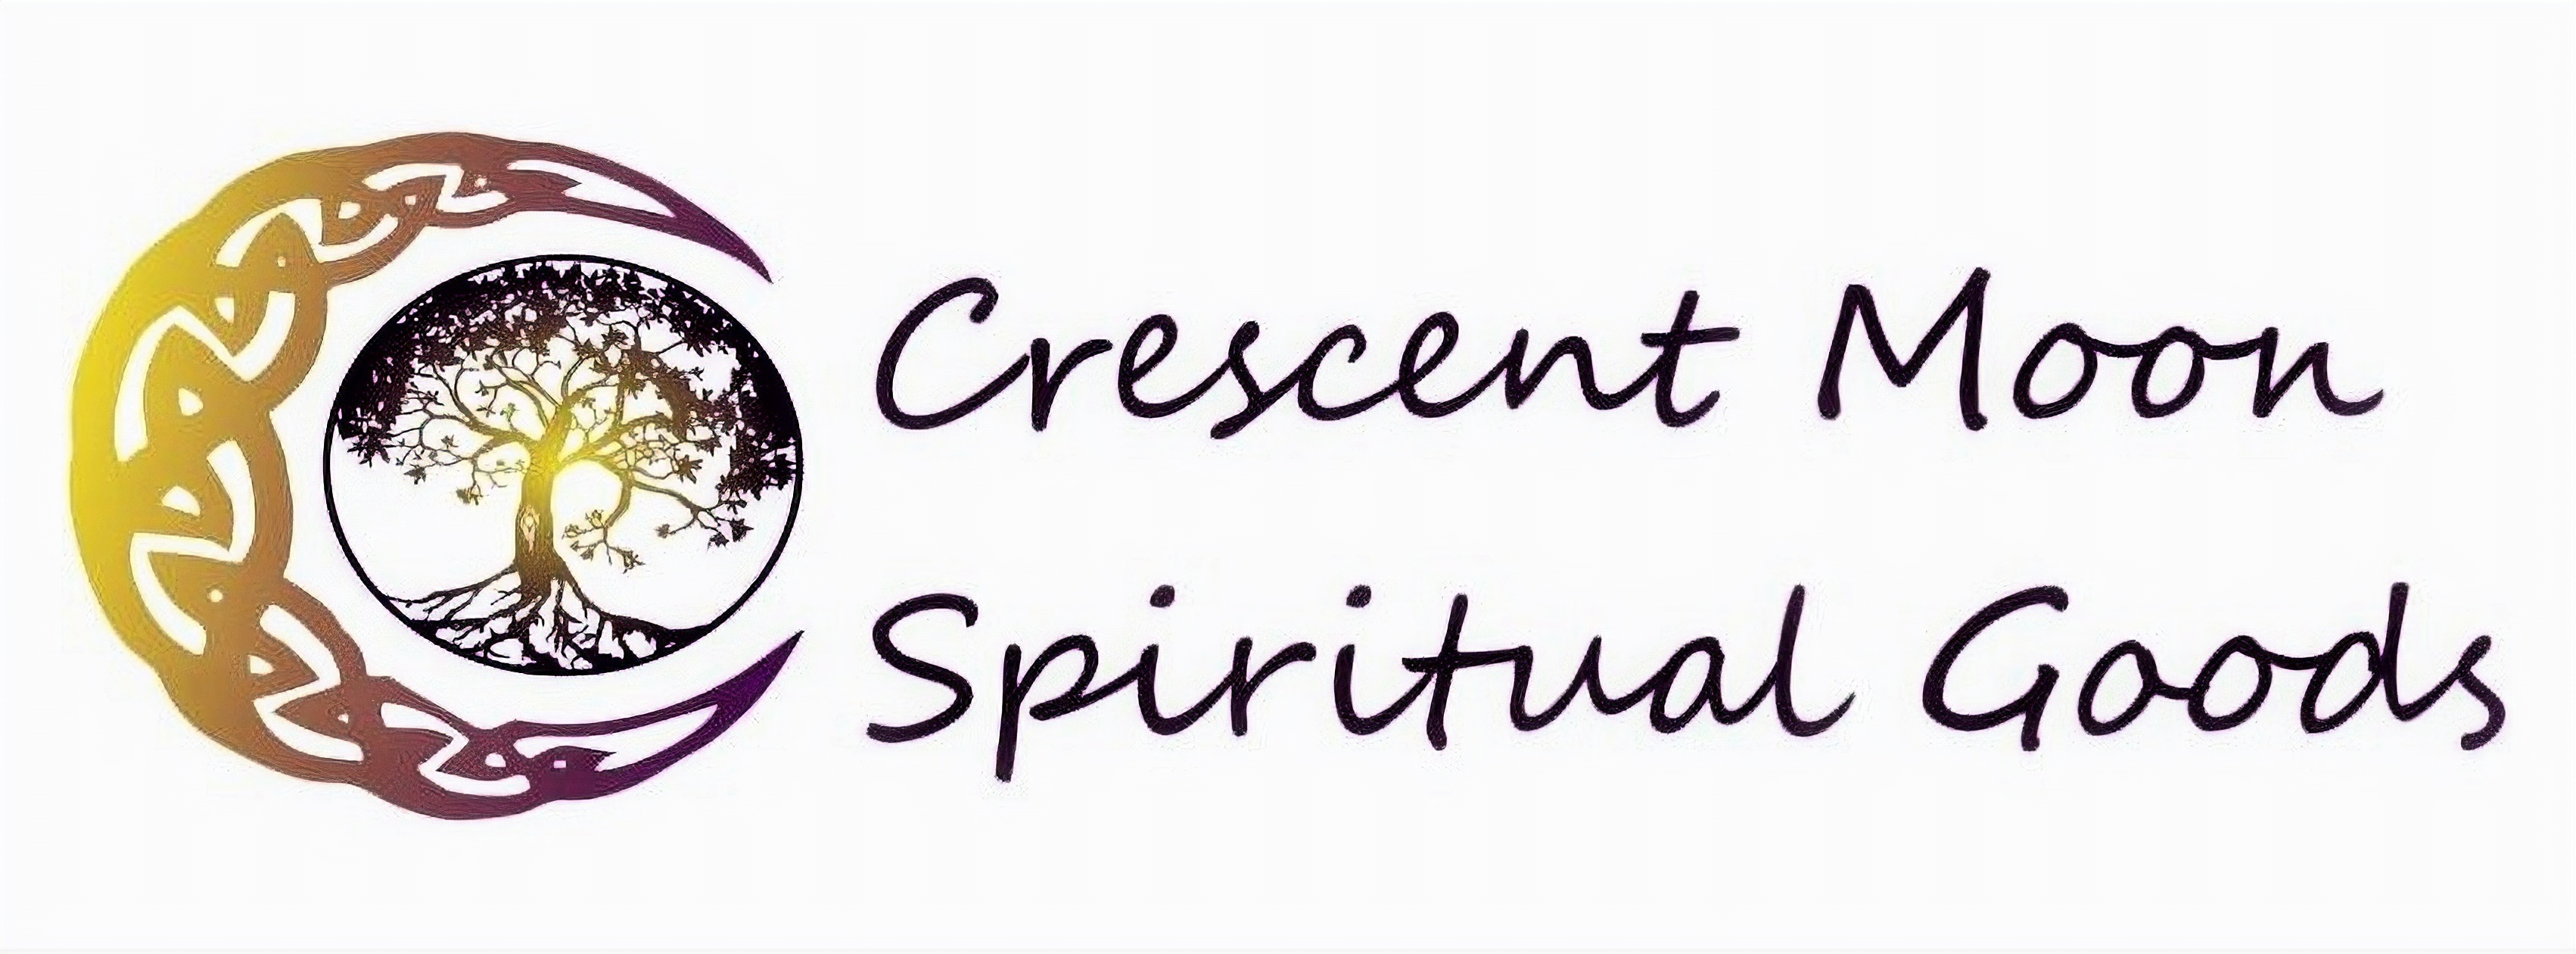 Crescent Moon Spiritual Goods logo